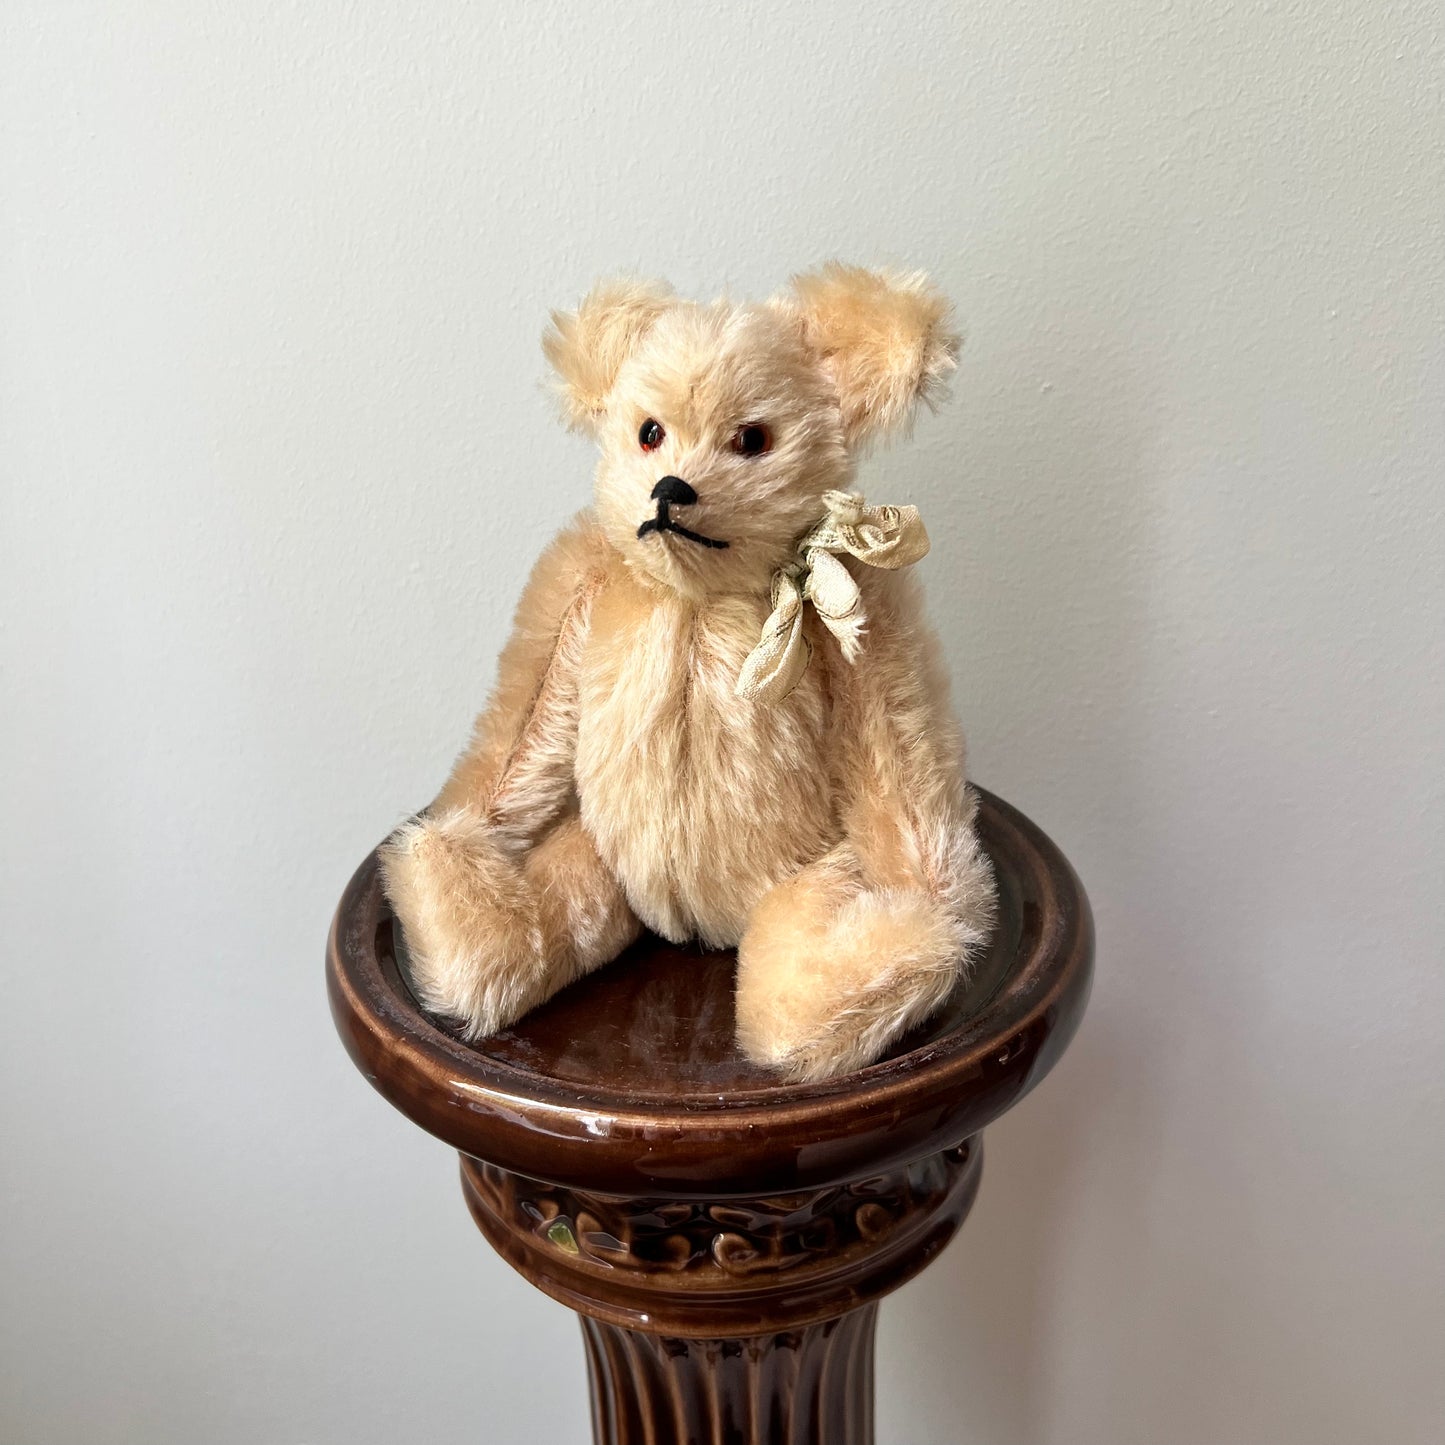 【Vintage】Germany - Schuco Teddy Bear